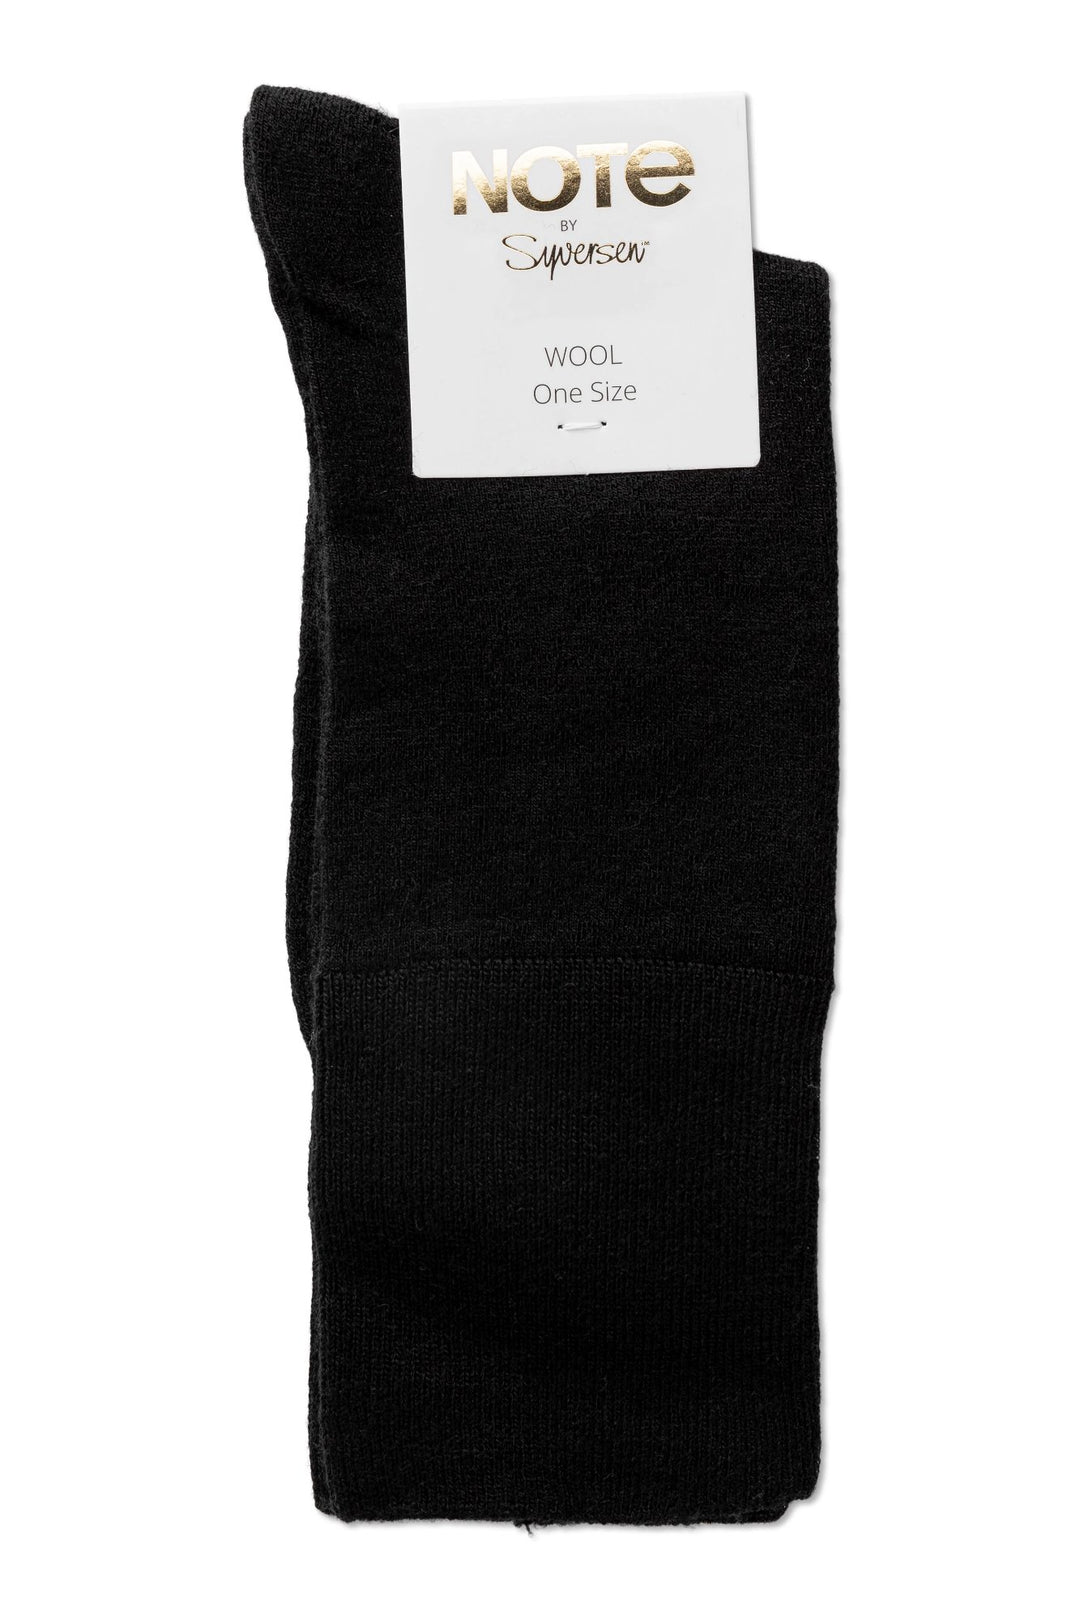 Uldstrømper | Note by Syversen Fine wool comfort top, black